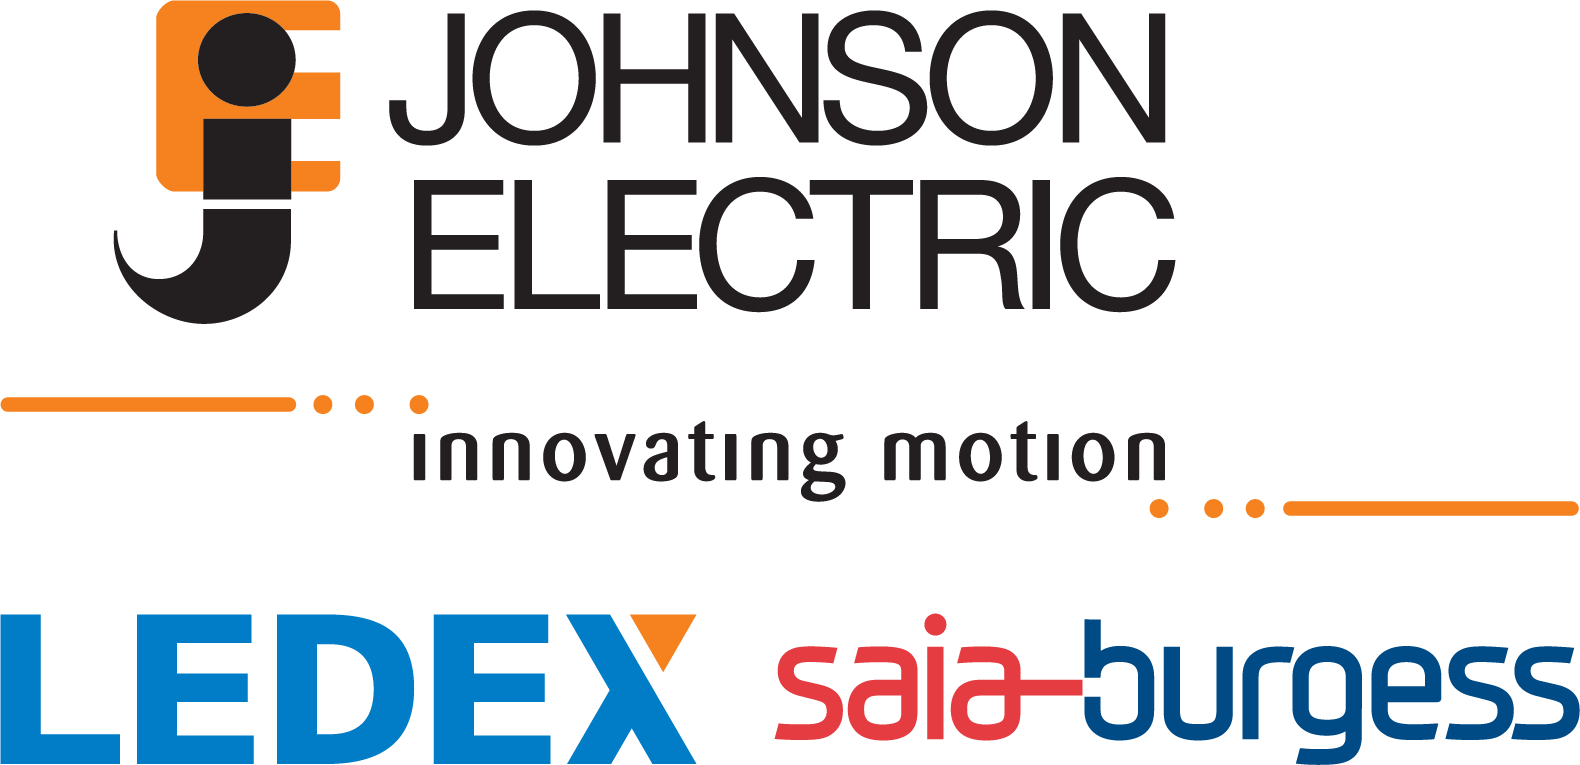 Saia (Division of Johnson Electric)